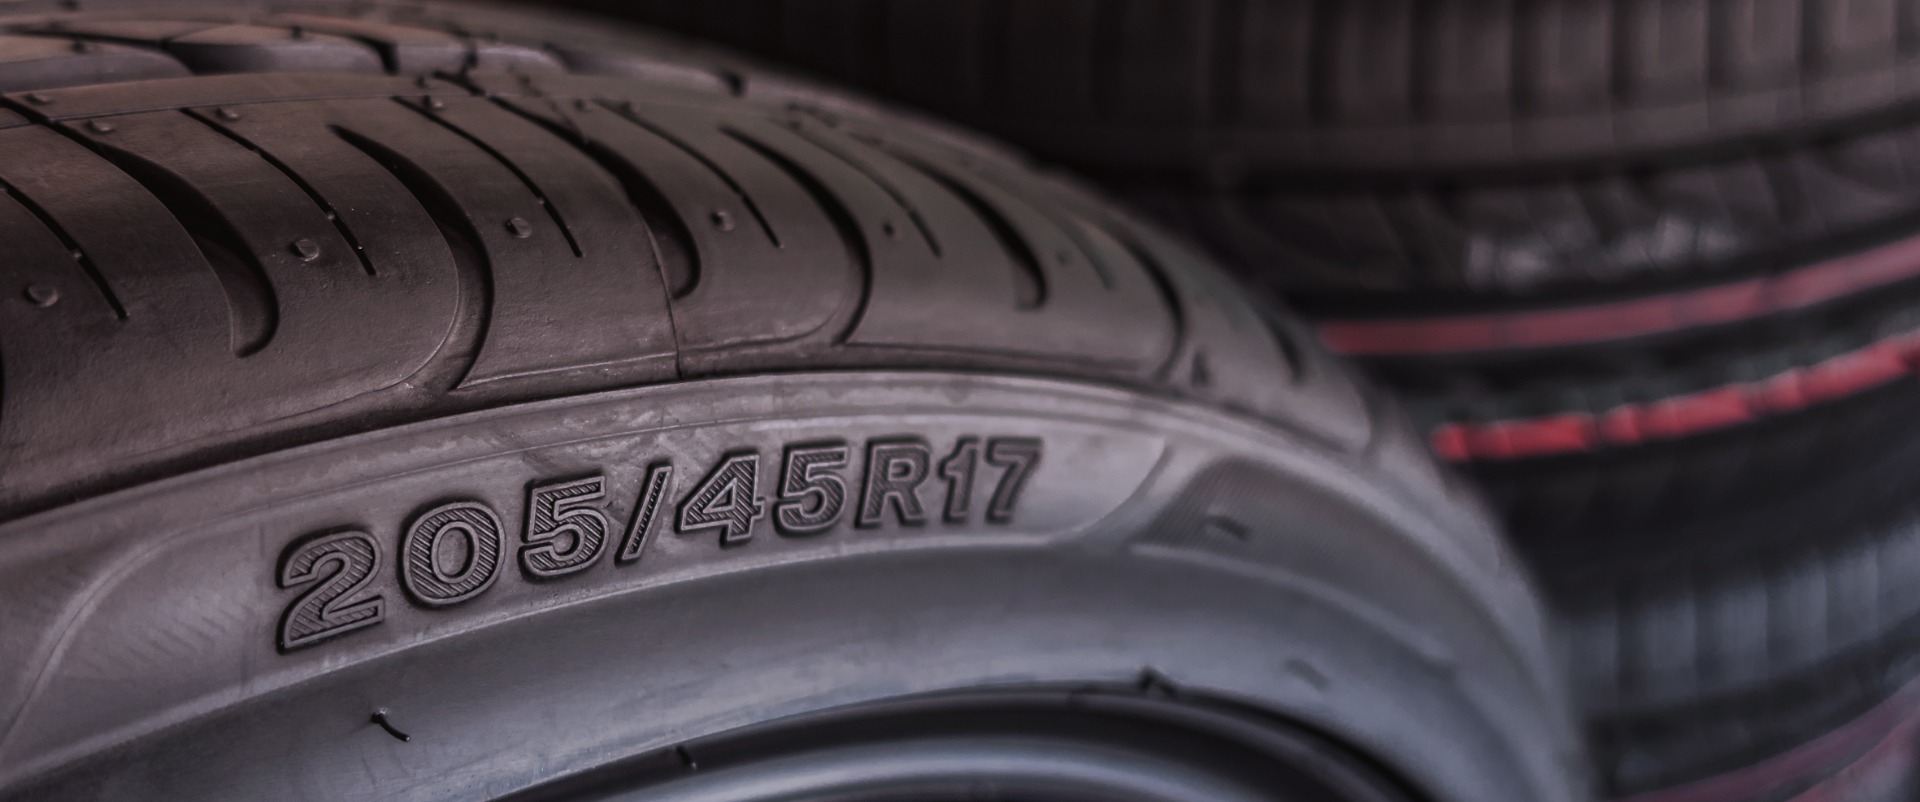 Image of a tyre - Tyres Alton